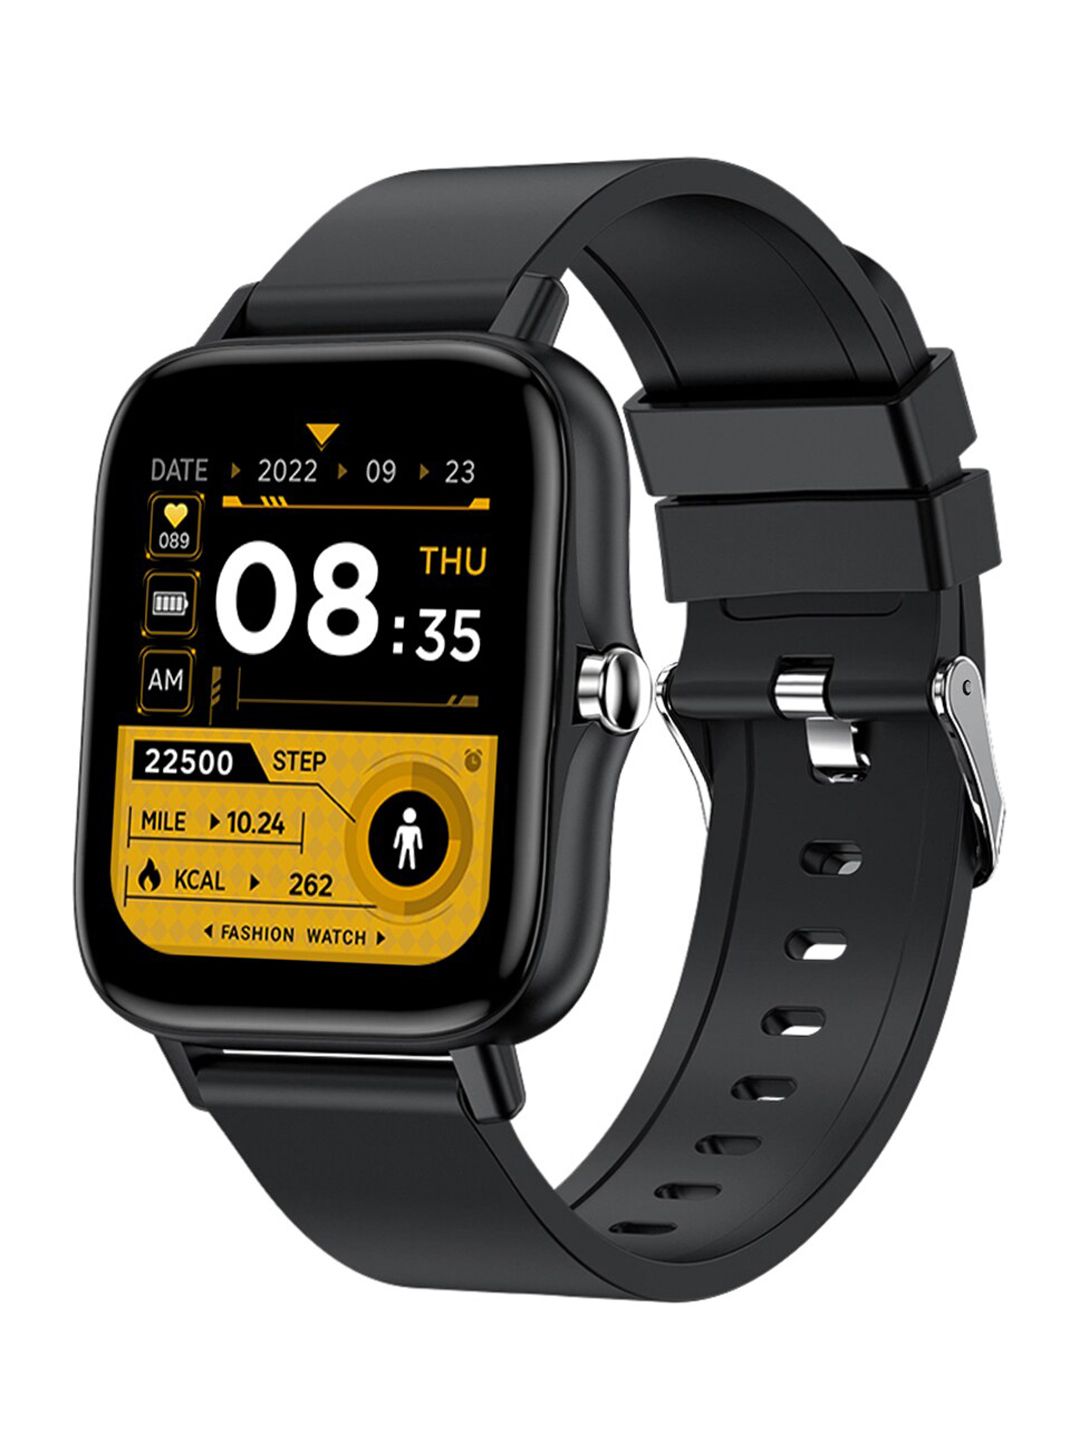 GIORDANO Unisex Black Smartwatch R6-W31-01 Price in India